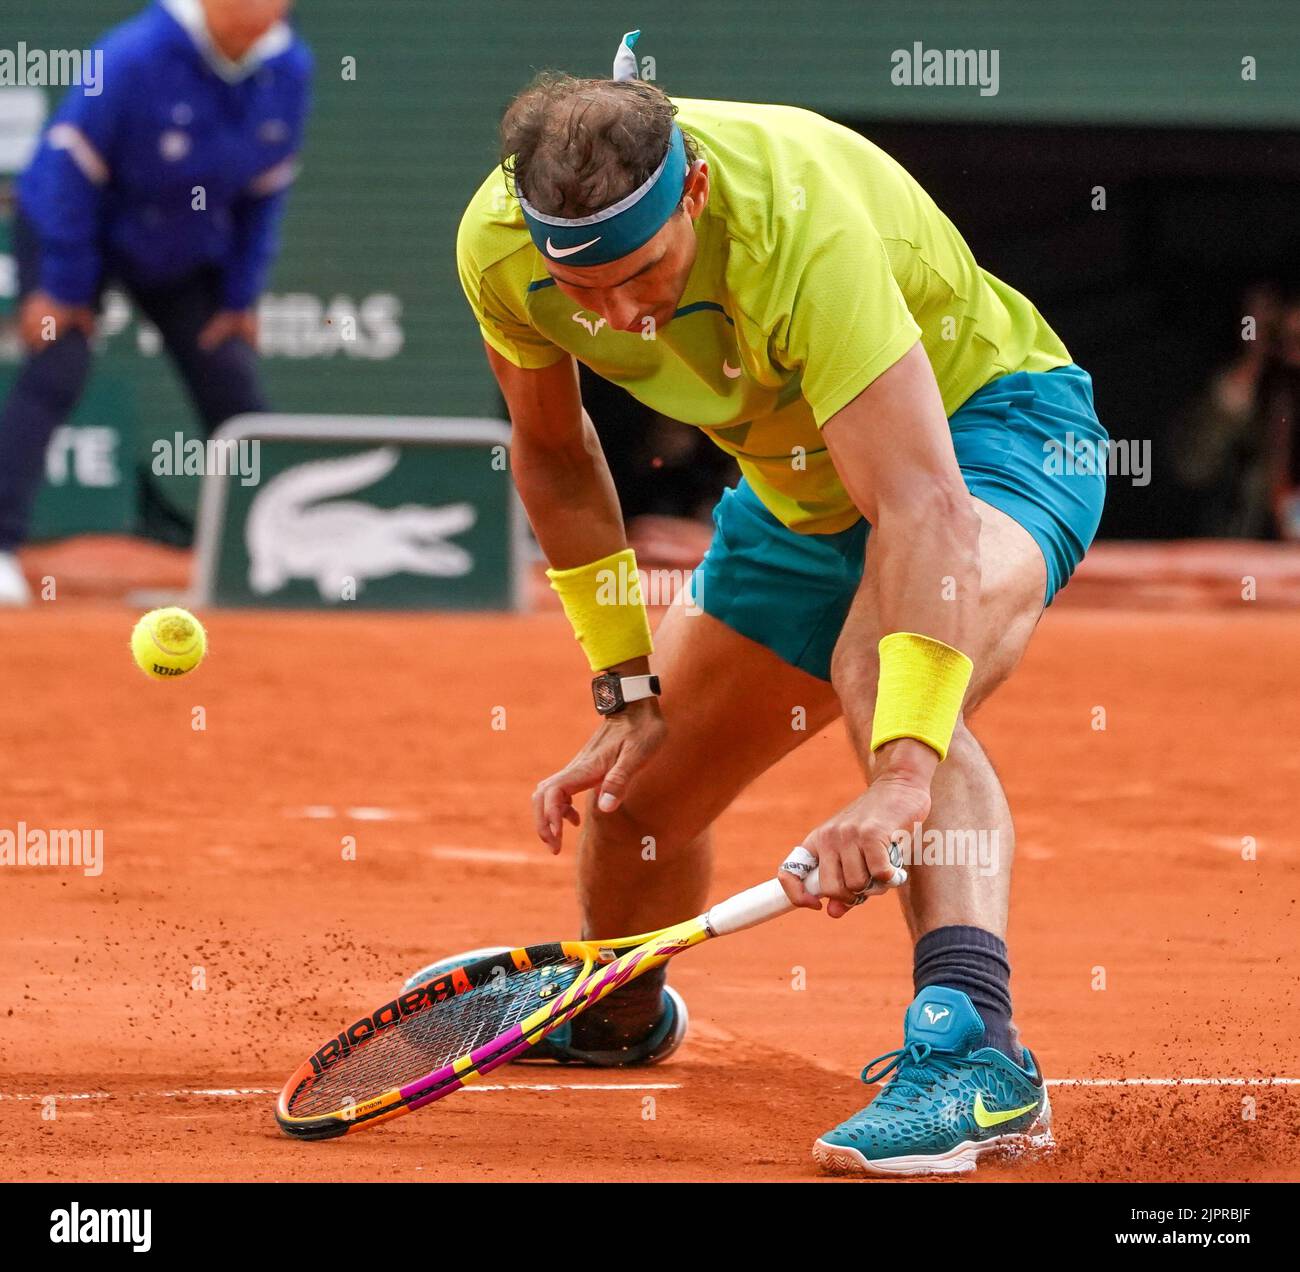 Grand Slam champion Rafael Nadal of Spain in action during his men's ...